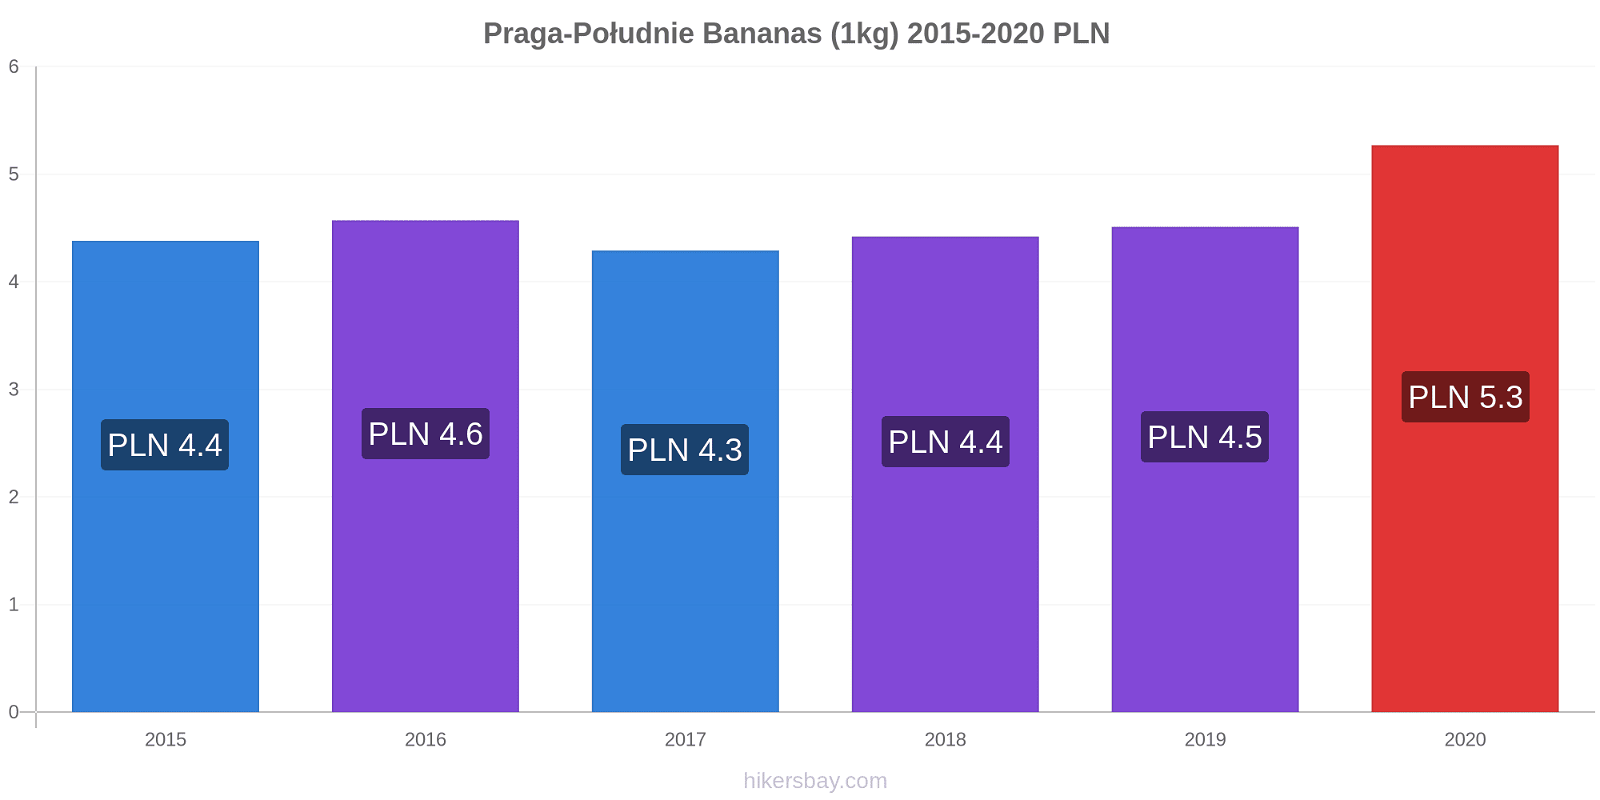 Praga-Południe price changes Bananas (1kg) hikersbay.com